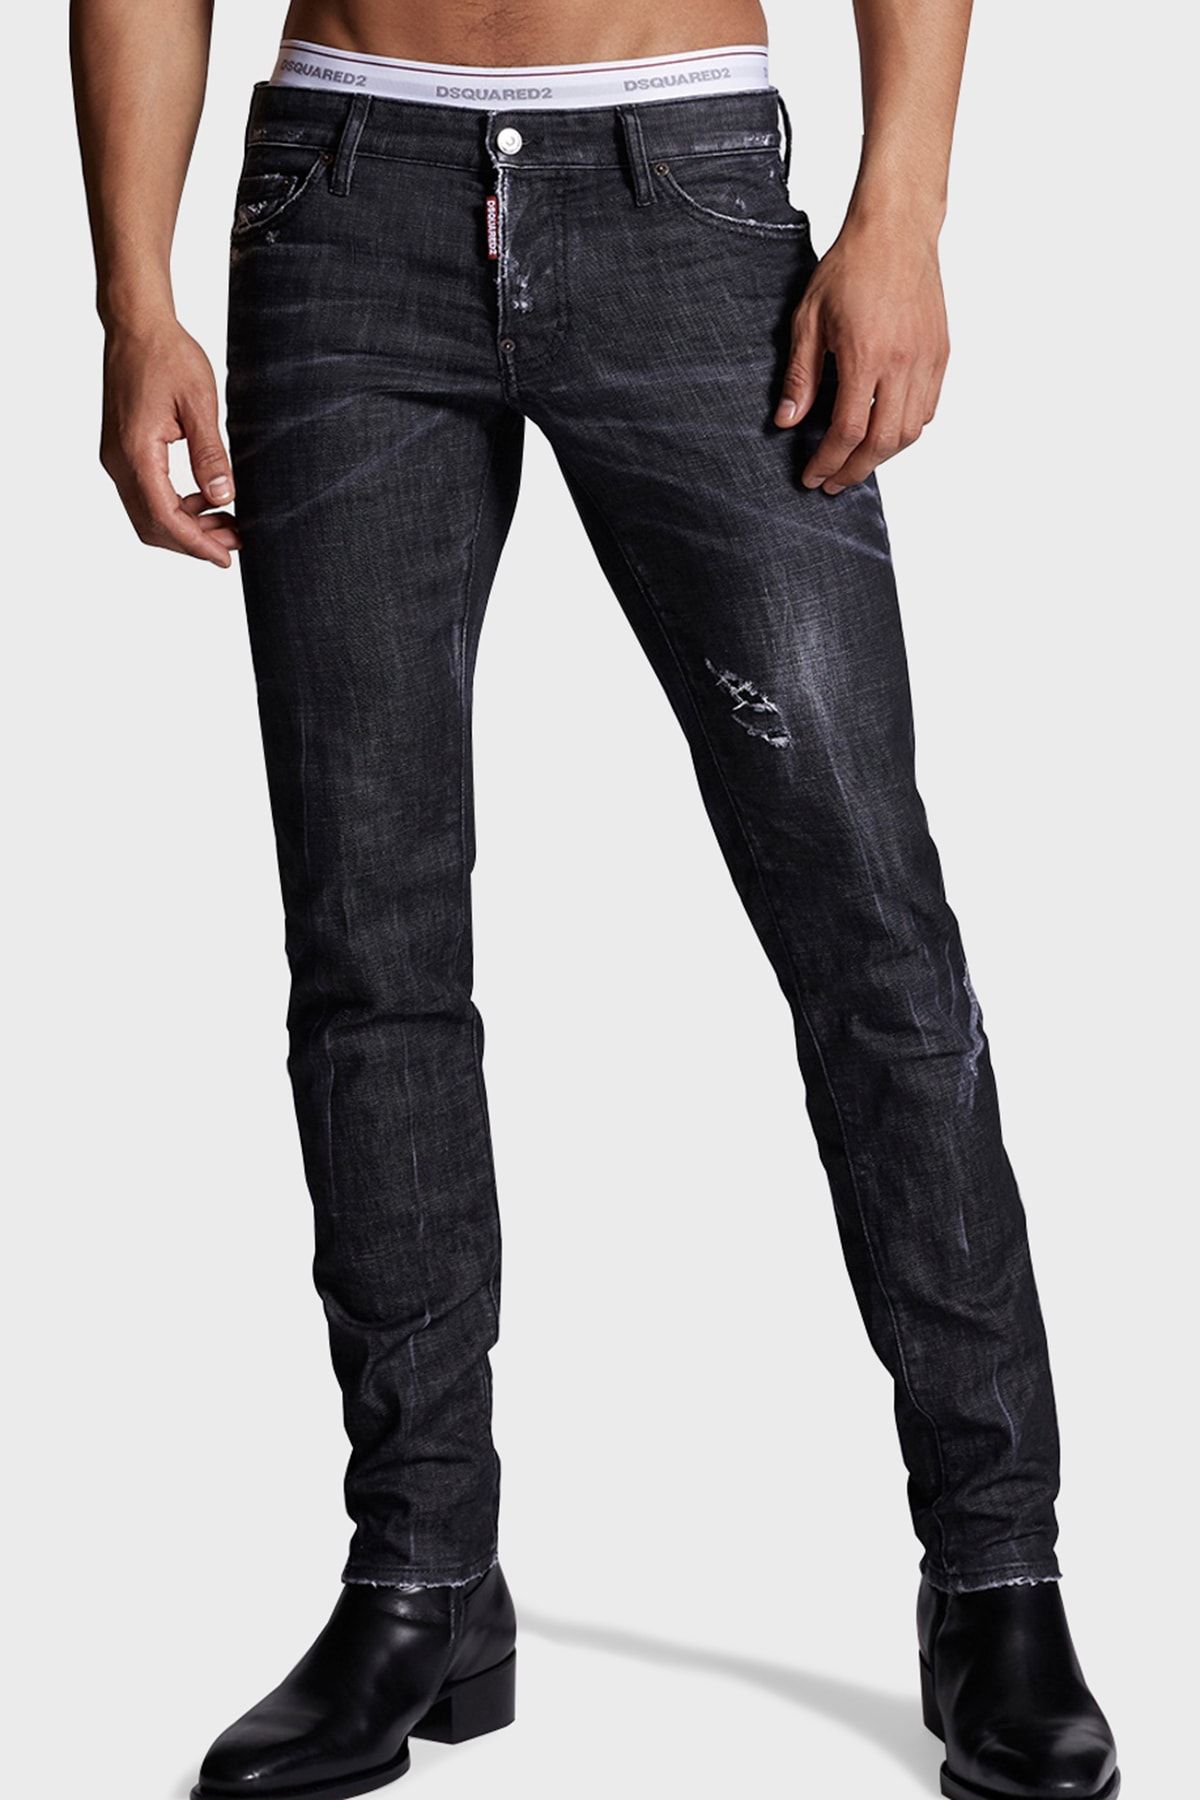 Dsquared 2 Pamuklu Normal Bel Slim Fit Jeans Erkek Kot Pantolon S71lb0967 S30357 900